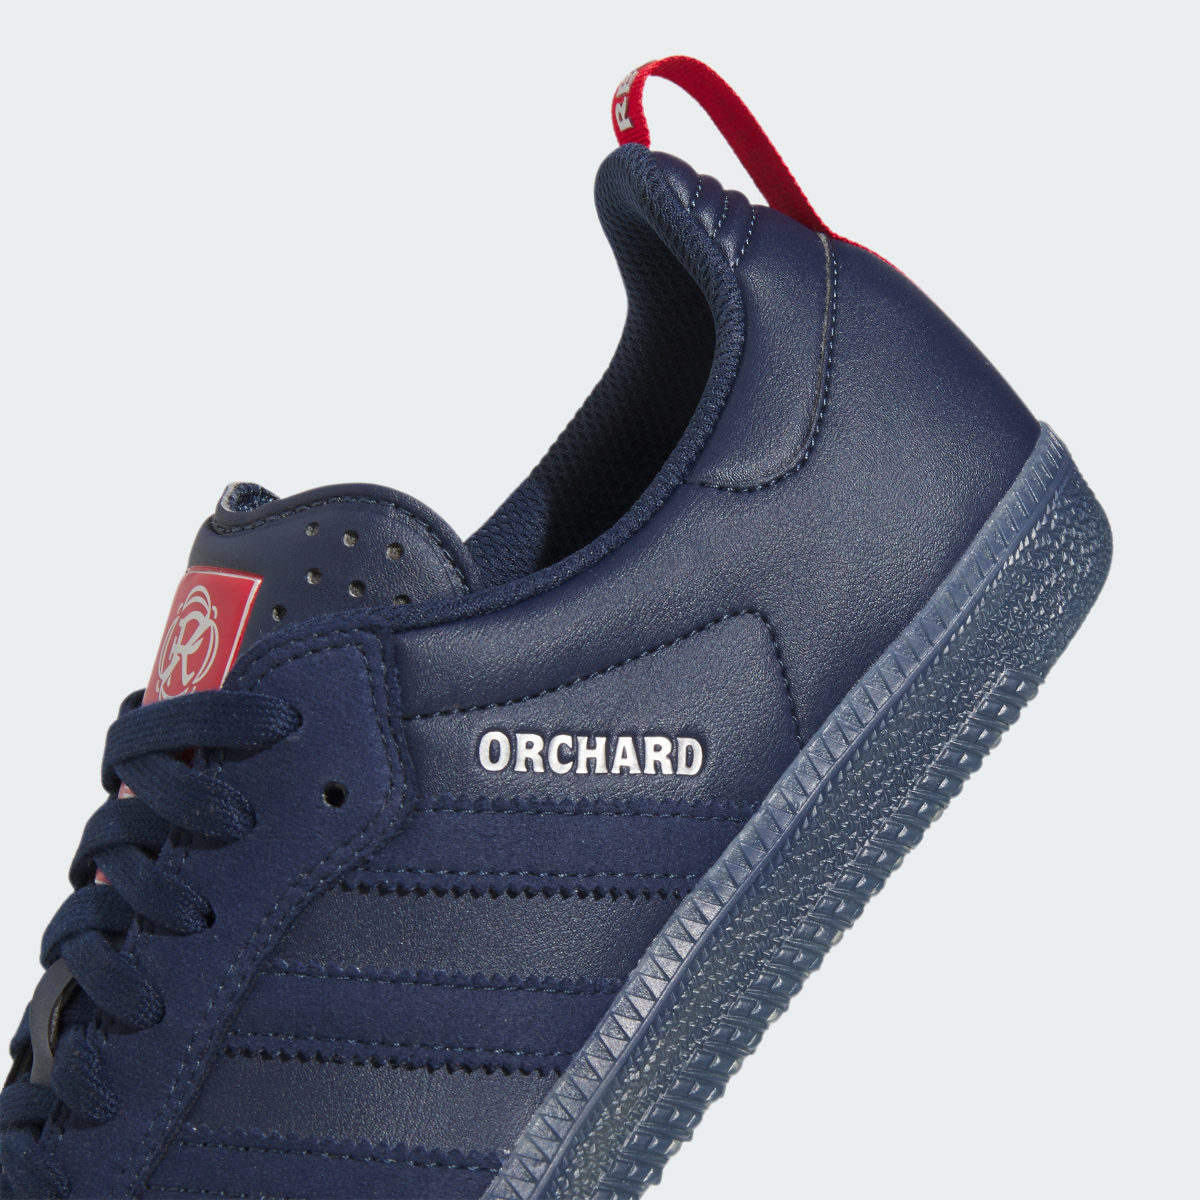 Adidas Orchard x New England Revolution Samba ADV Shoes. 10